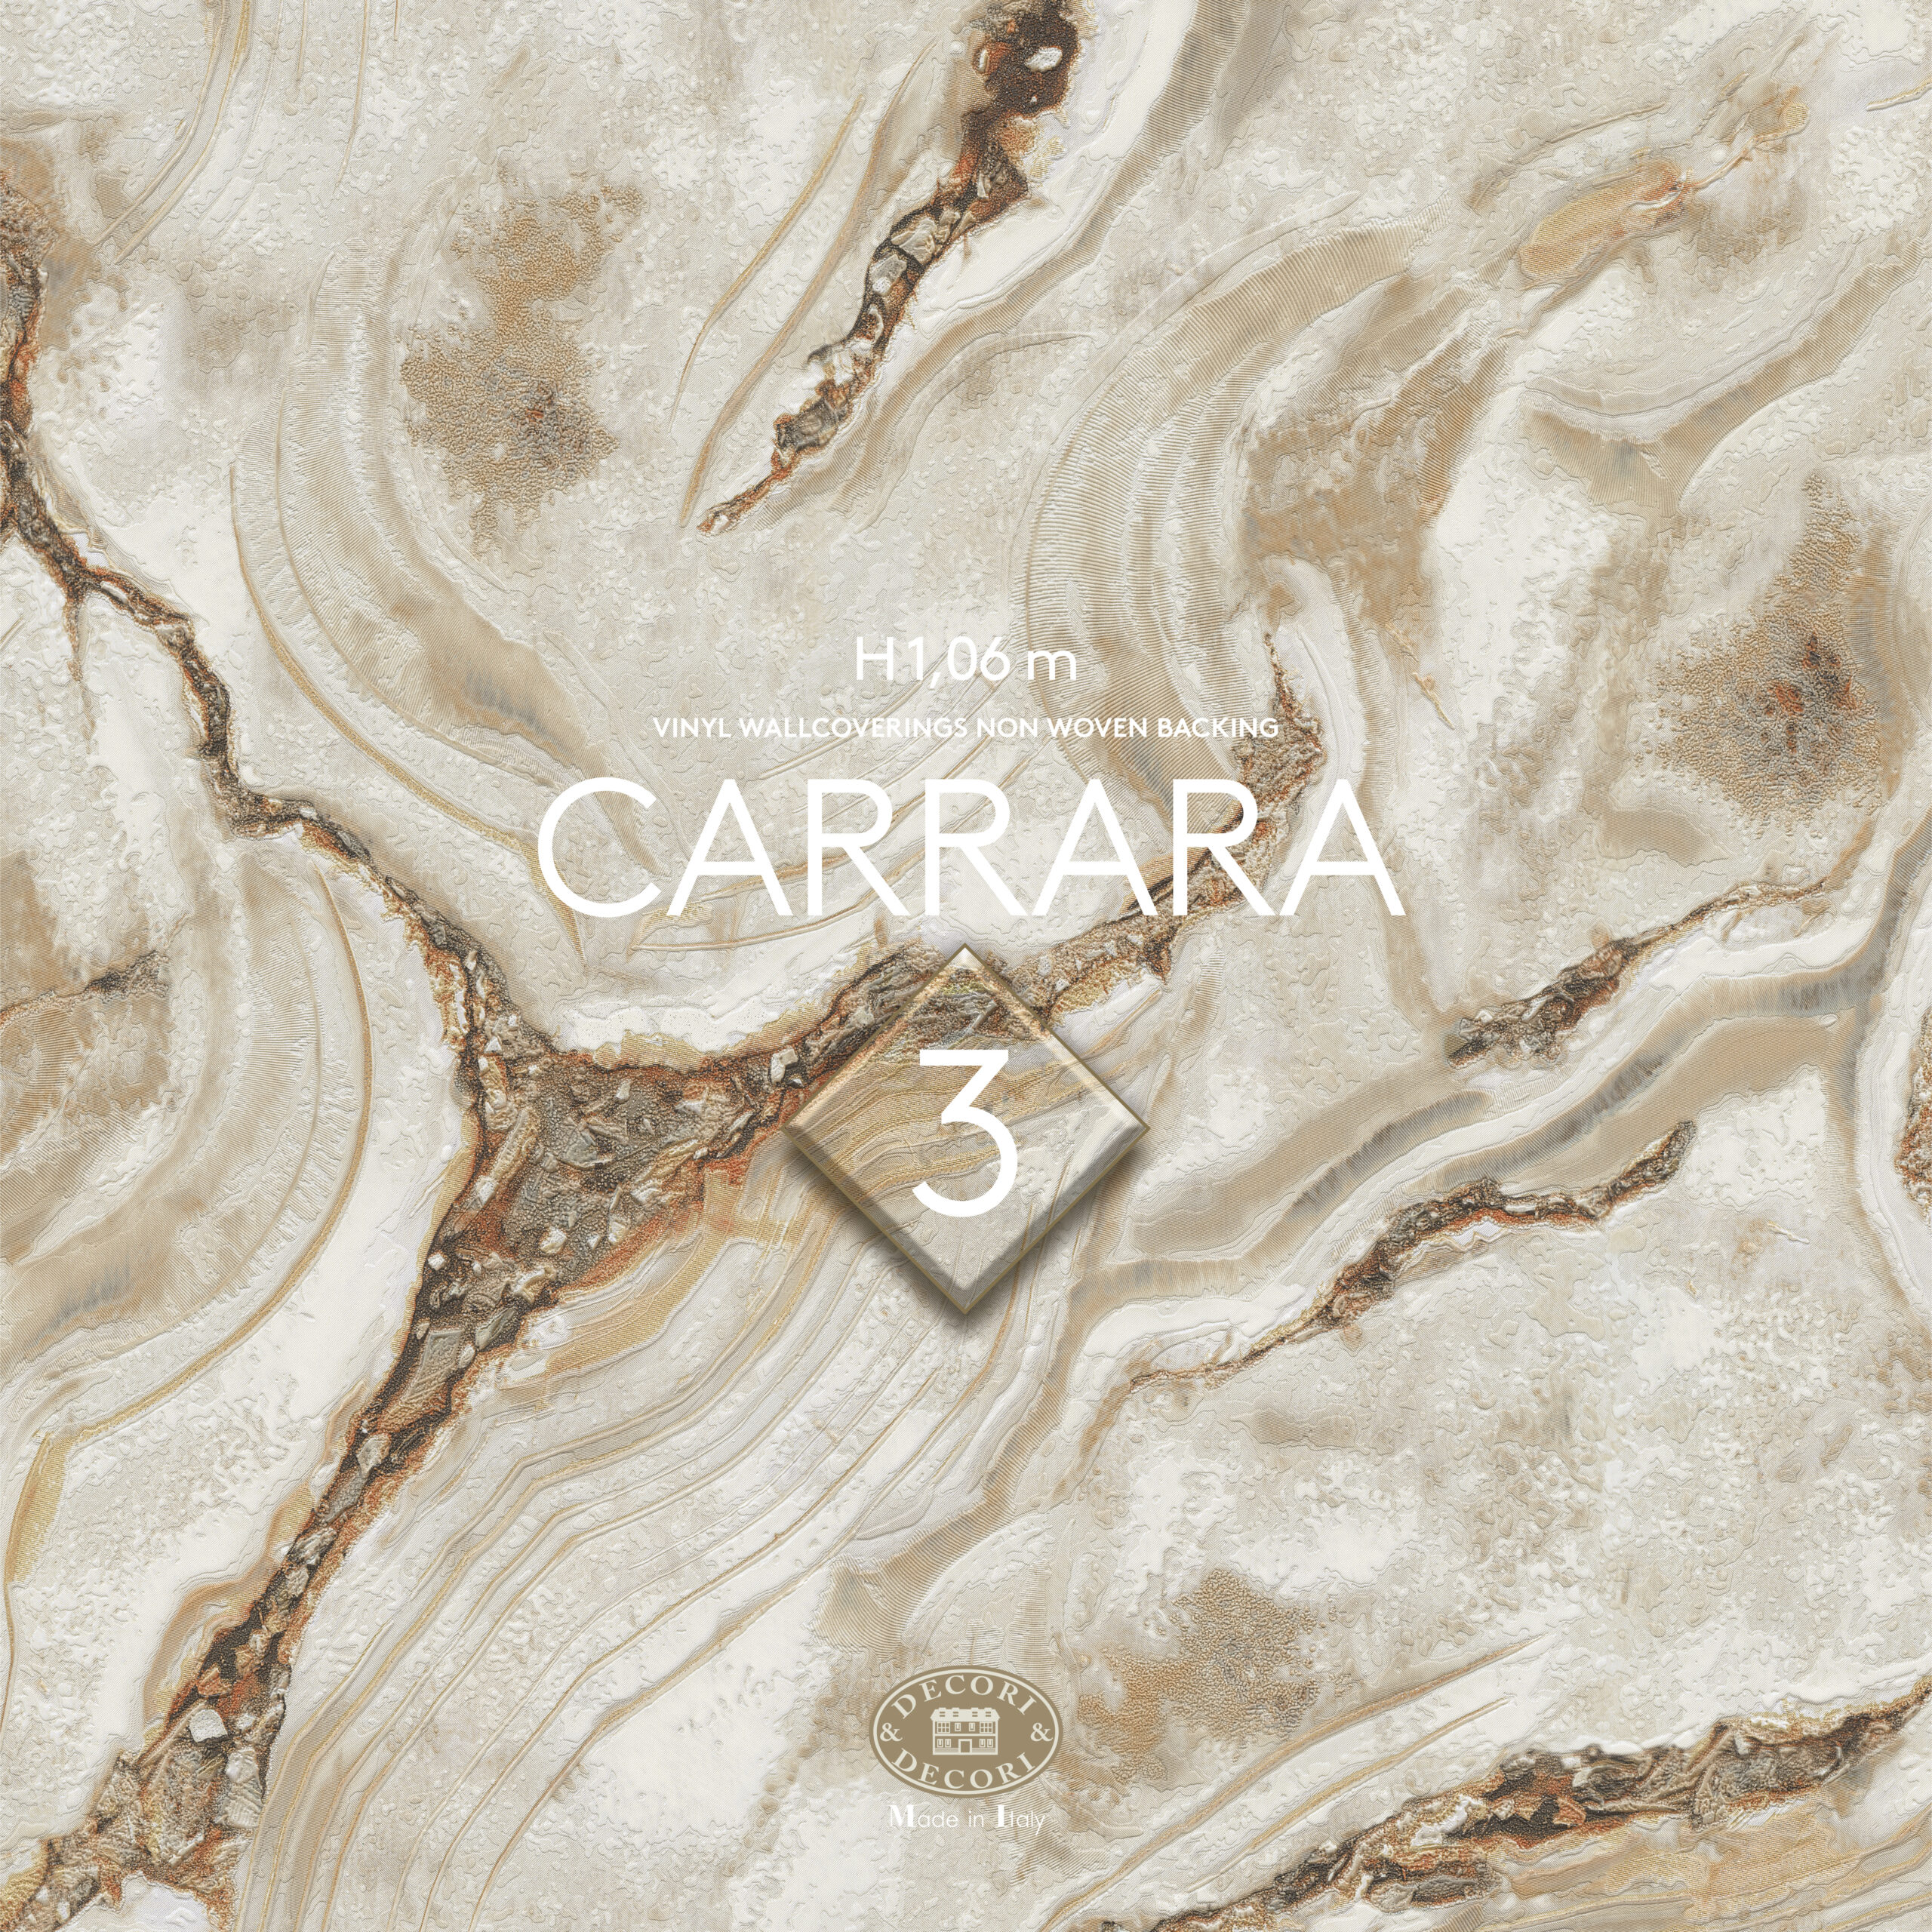 Carrara Lumea Tapetelor